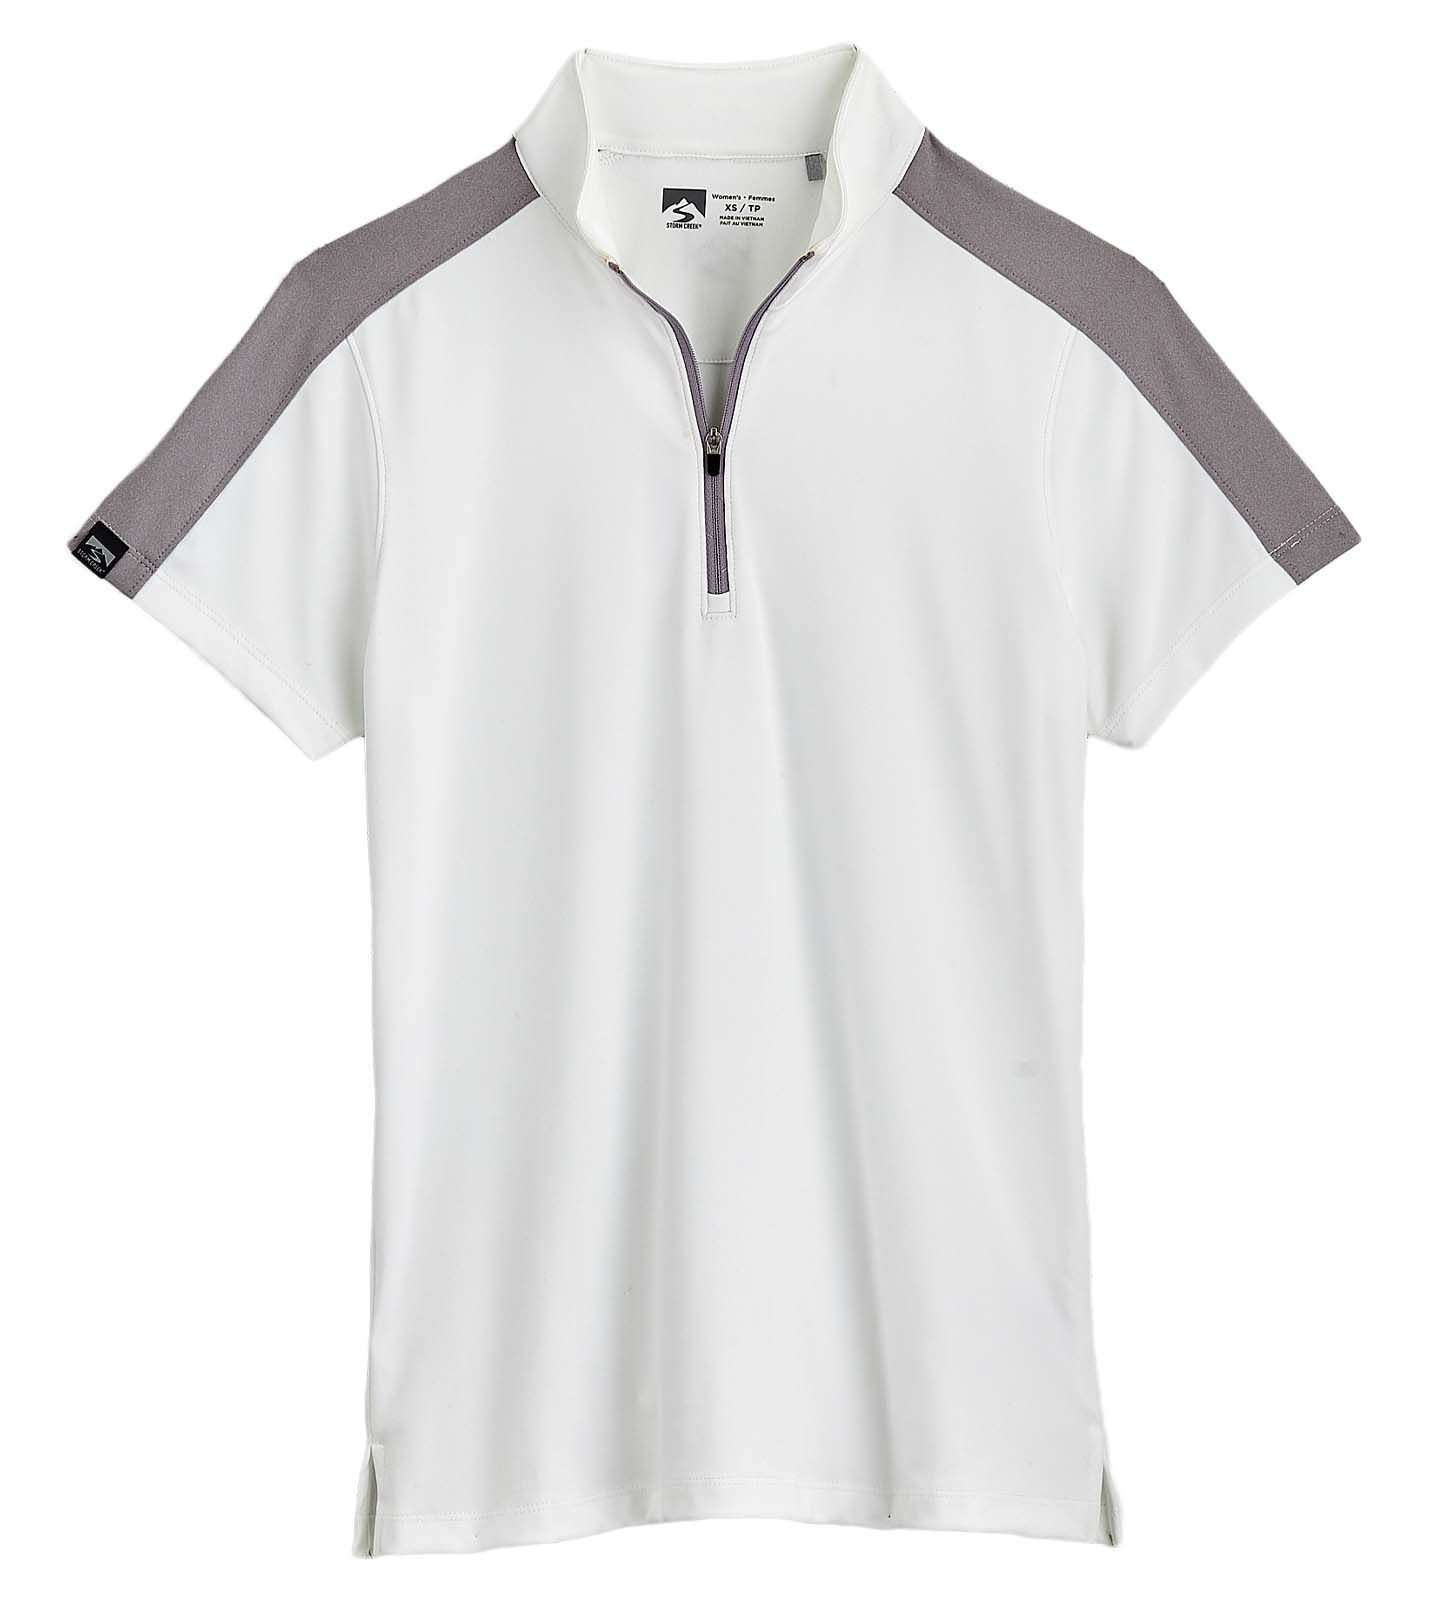 Storm Creek Activator Short-Sleeve Polo Shirt for Ladies - Dark Heather Gray/Black - White/Light Heather Gray - XS